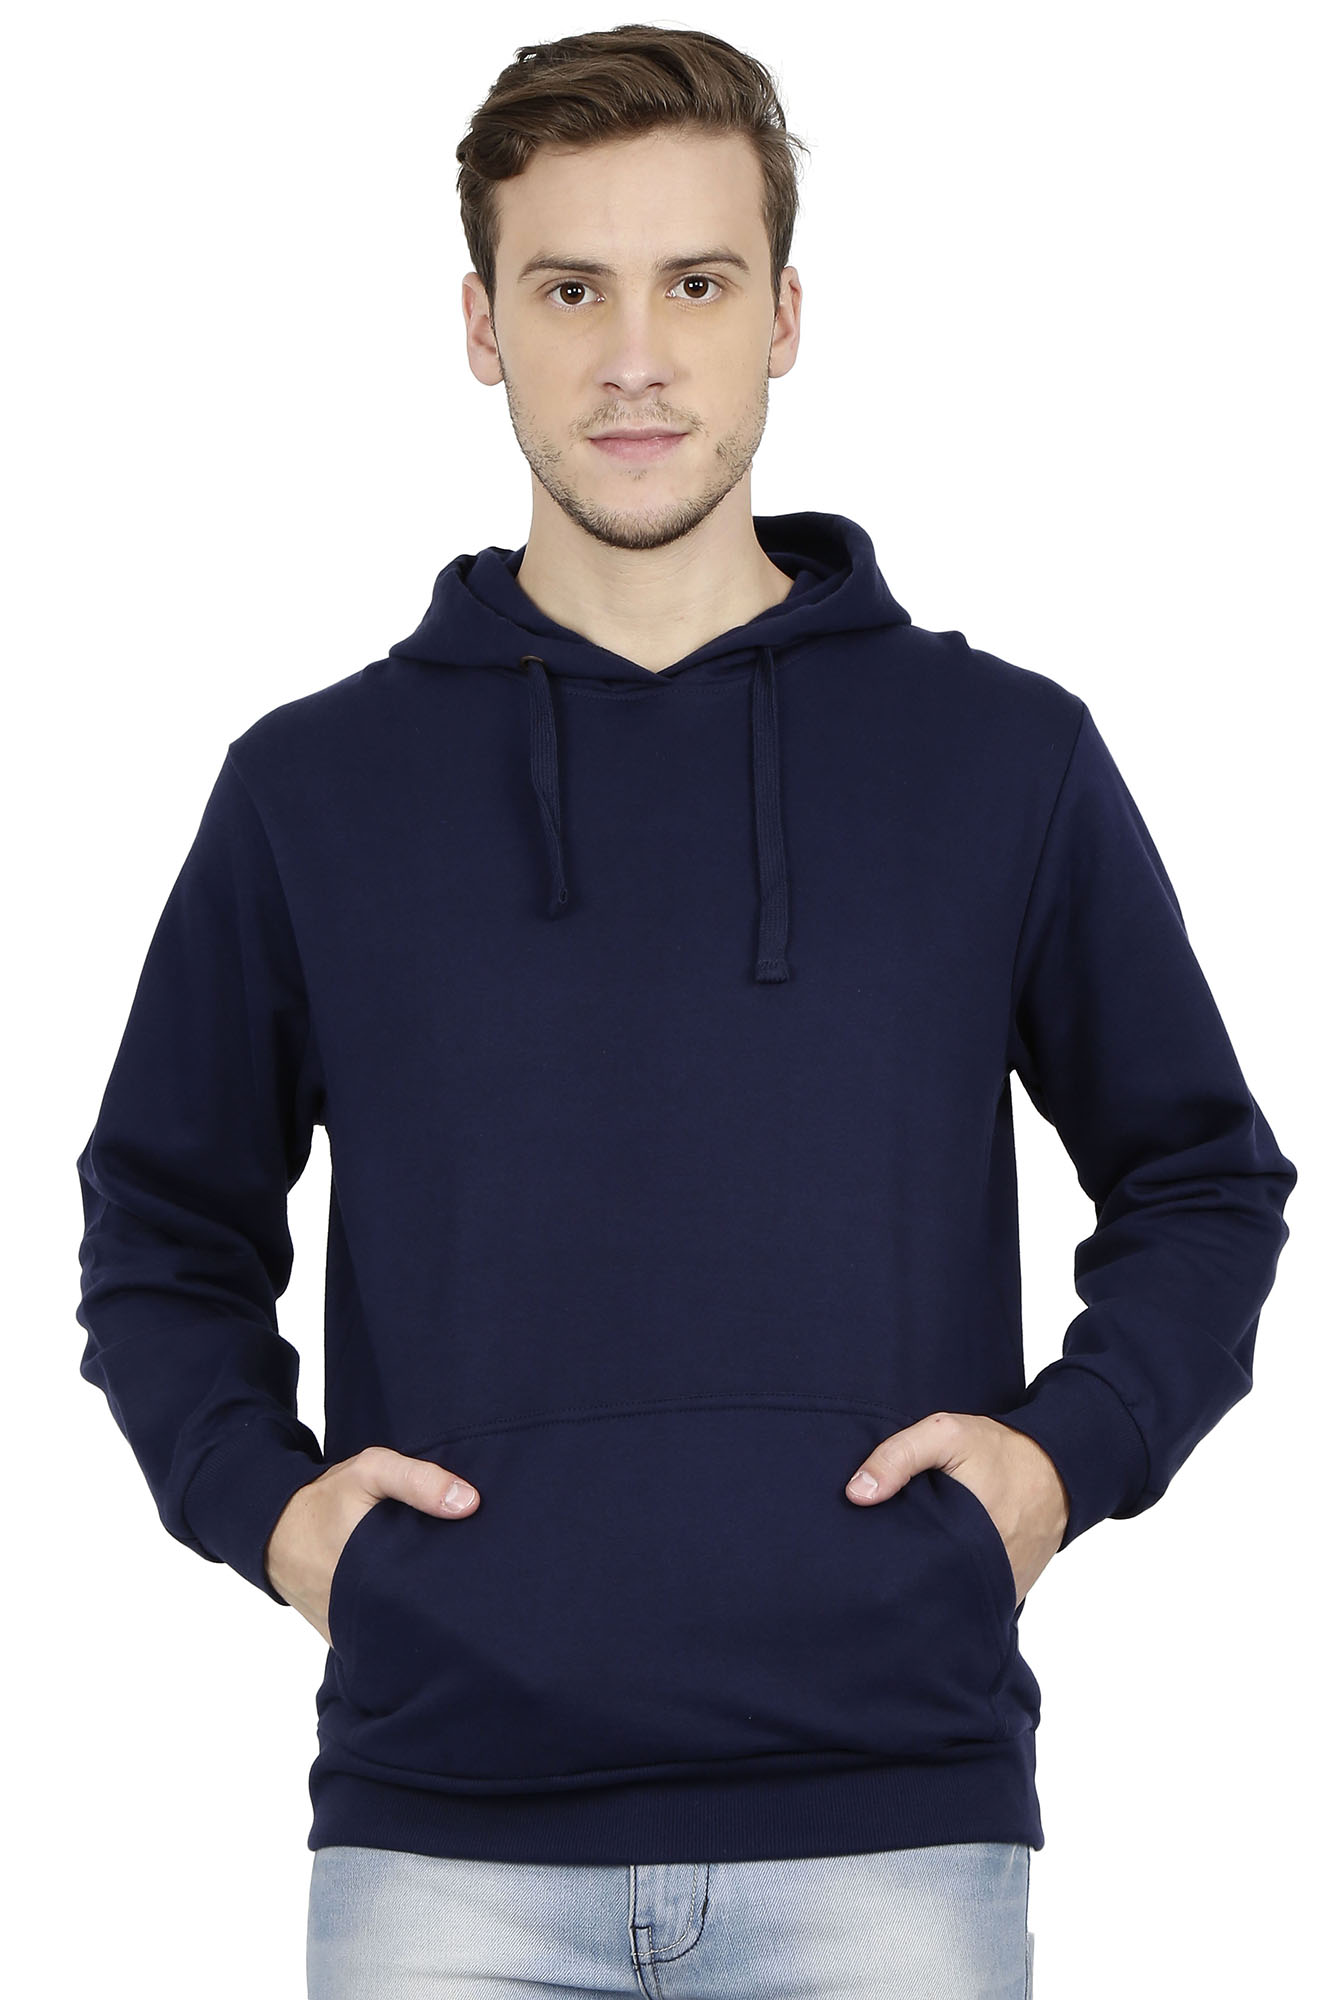 Navy Blue Hoodie Sweatshirt - meltmoon.com